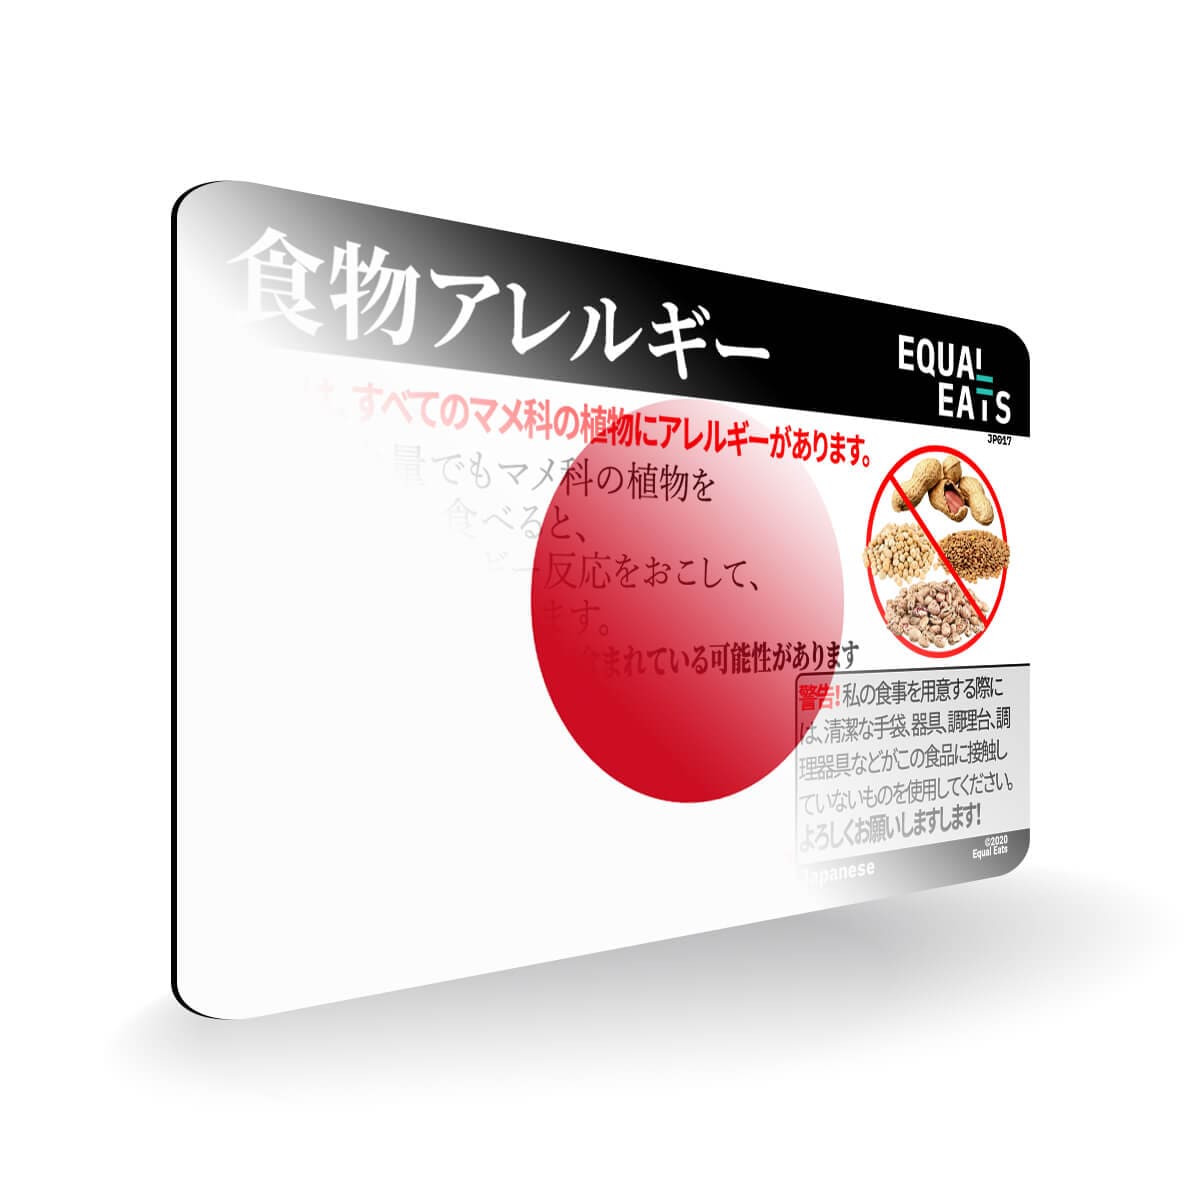 Legume Allergy in Japanese. Legume Allergy Card for Japan